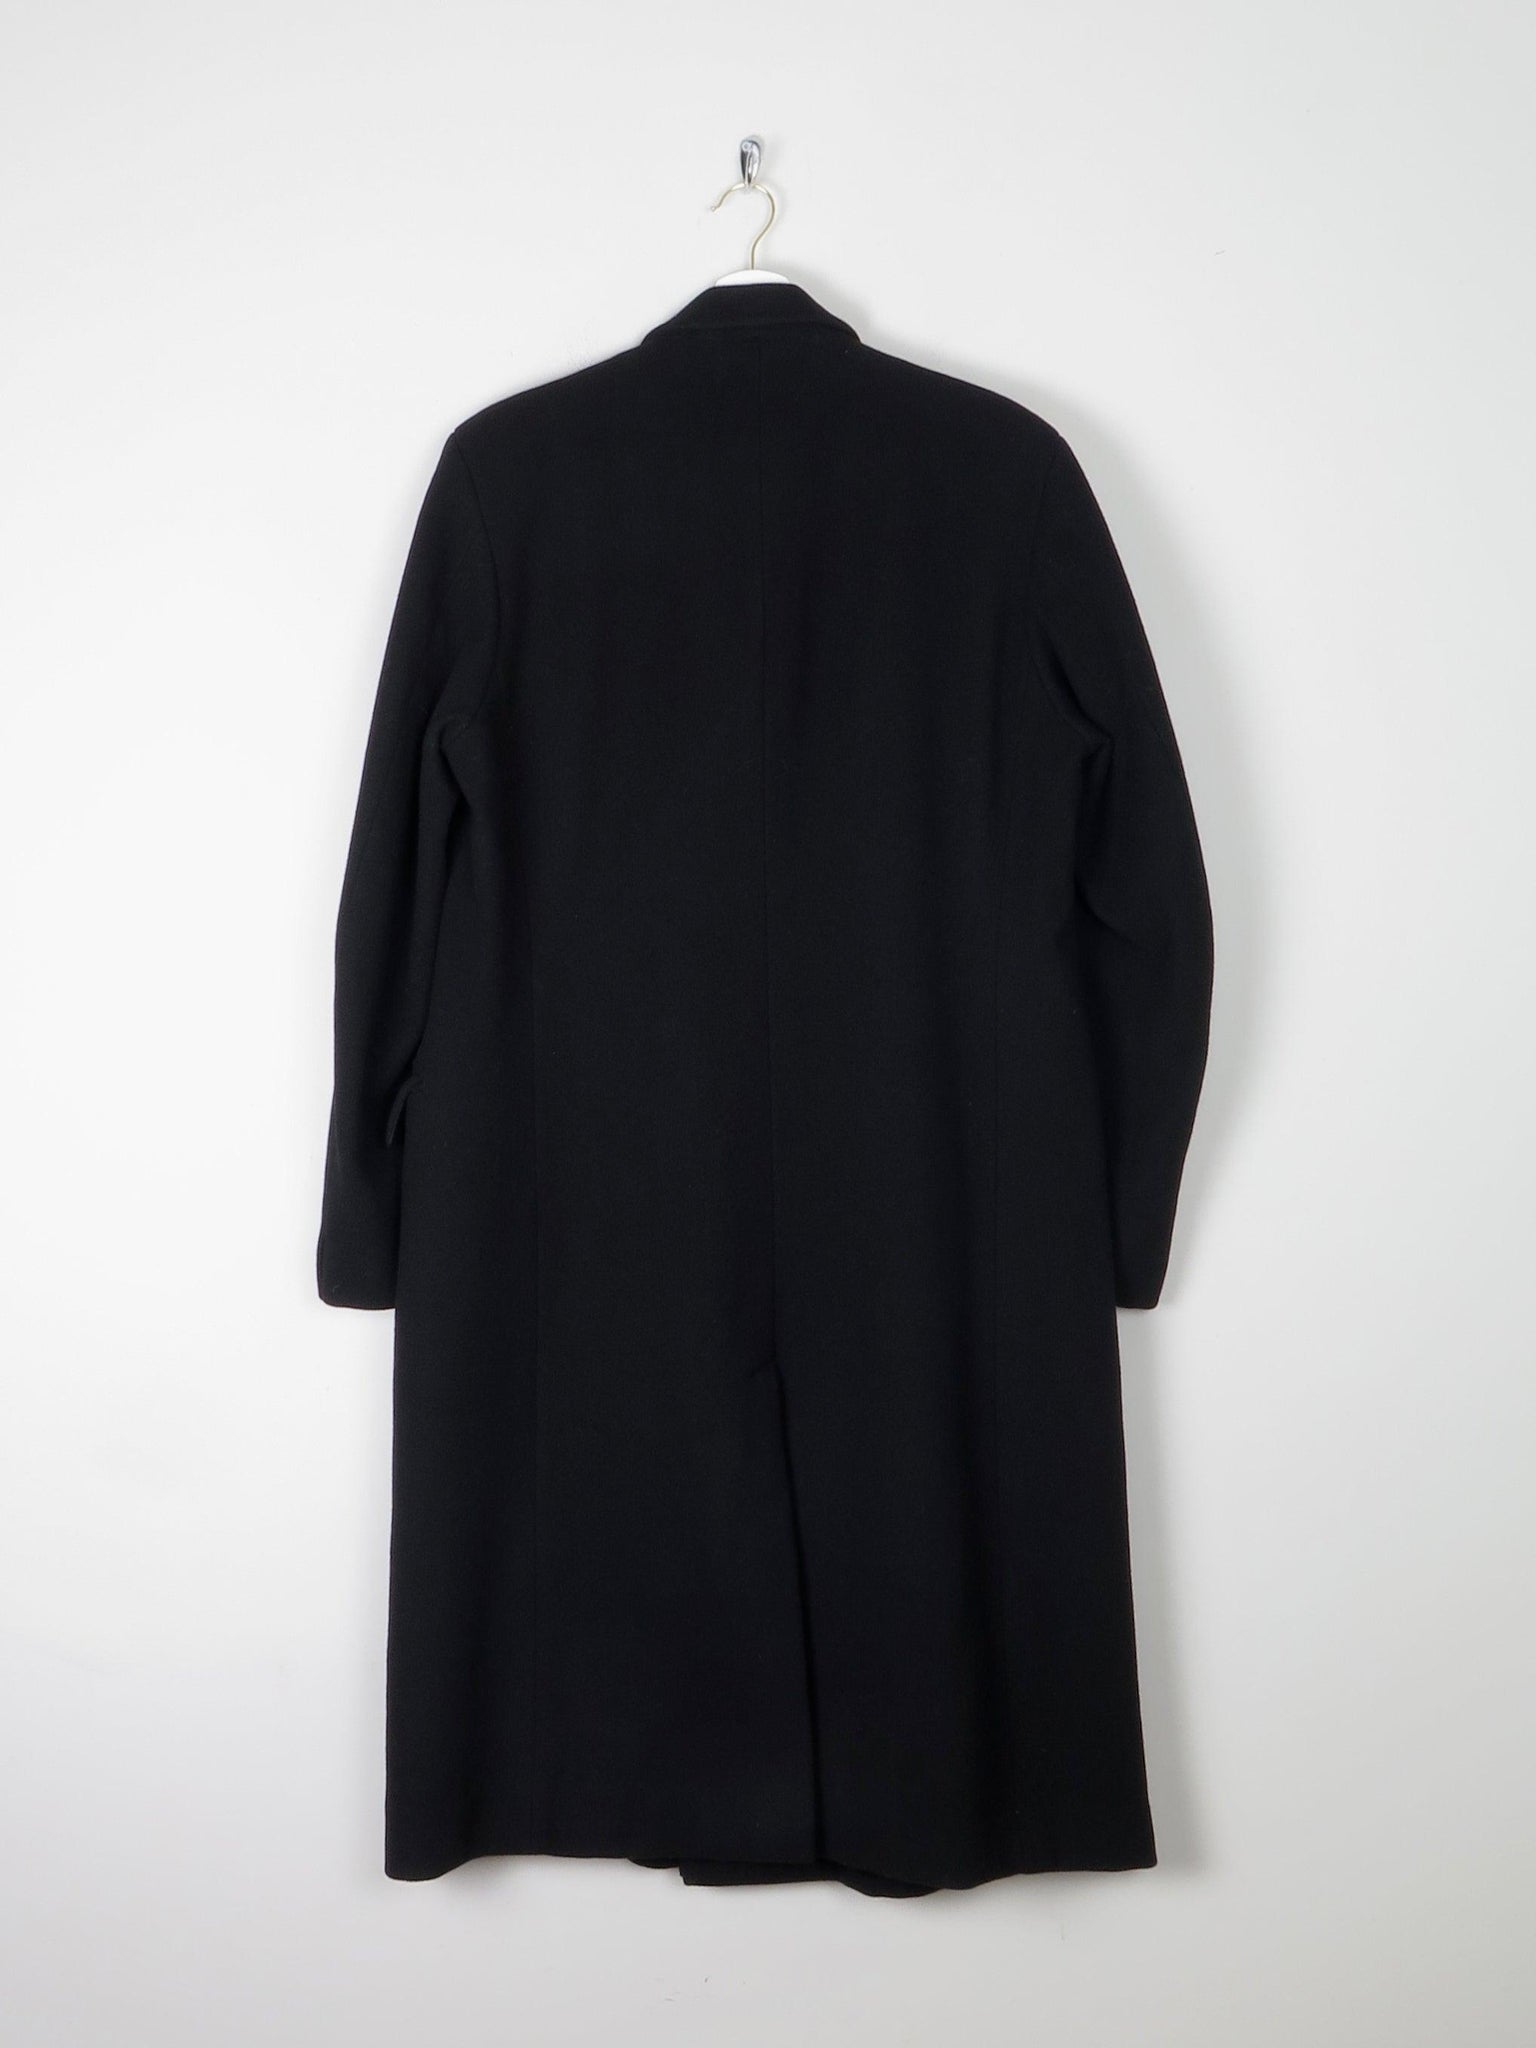 Men's Black Wool 1940s Long Coat 44/Large - The Harlequin